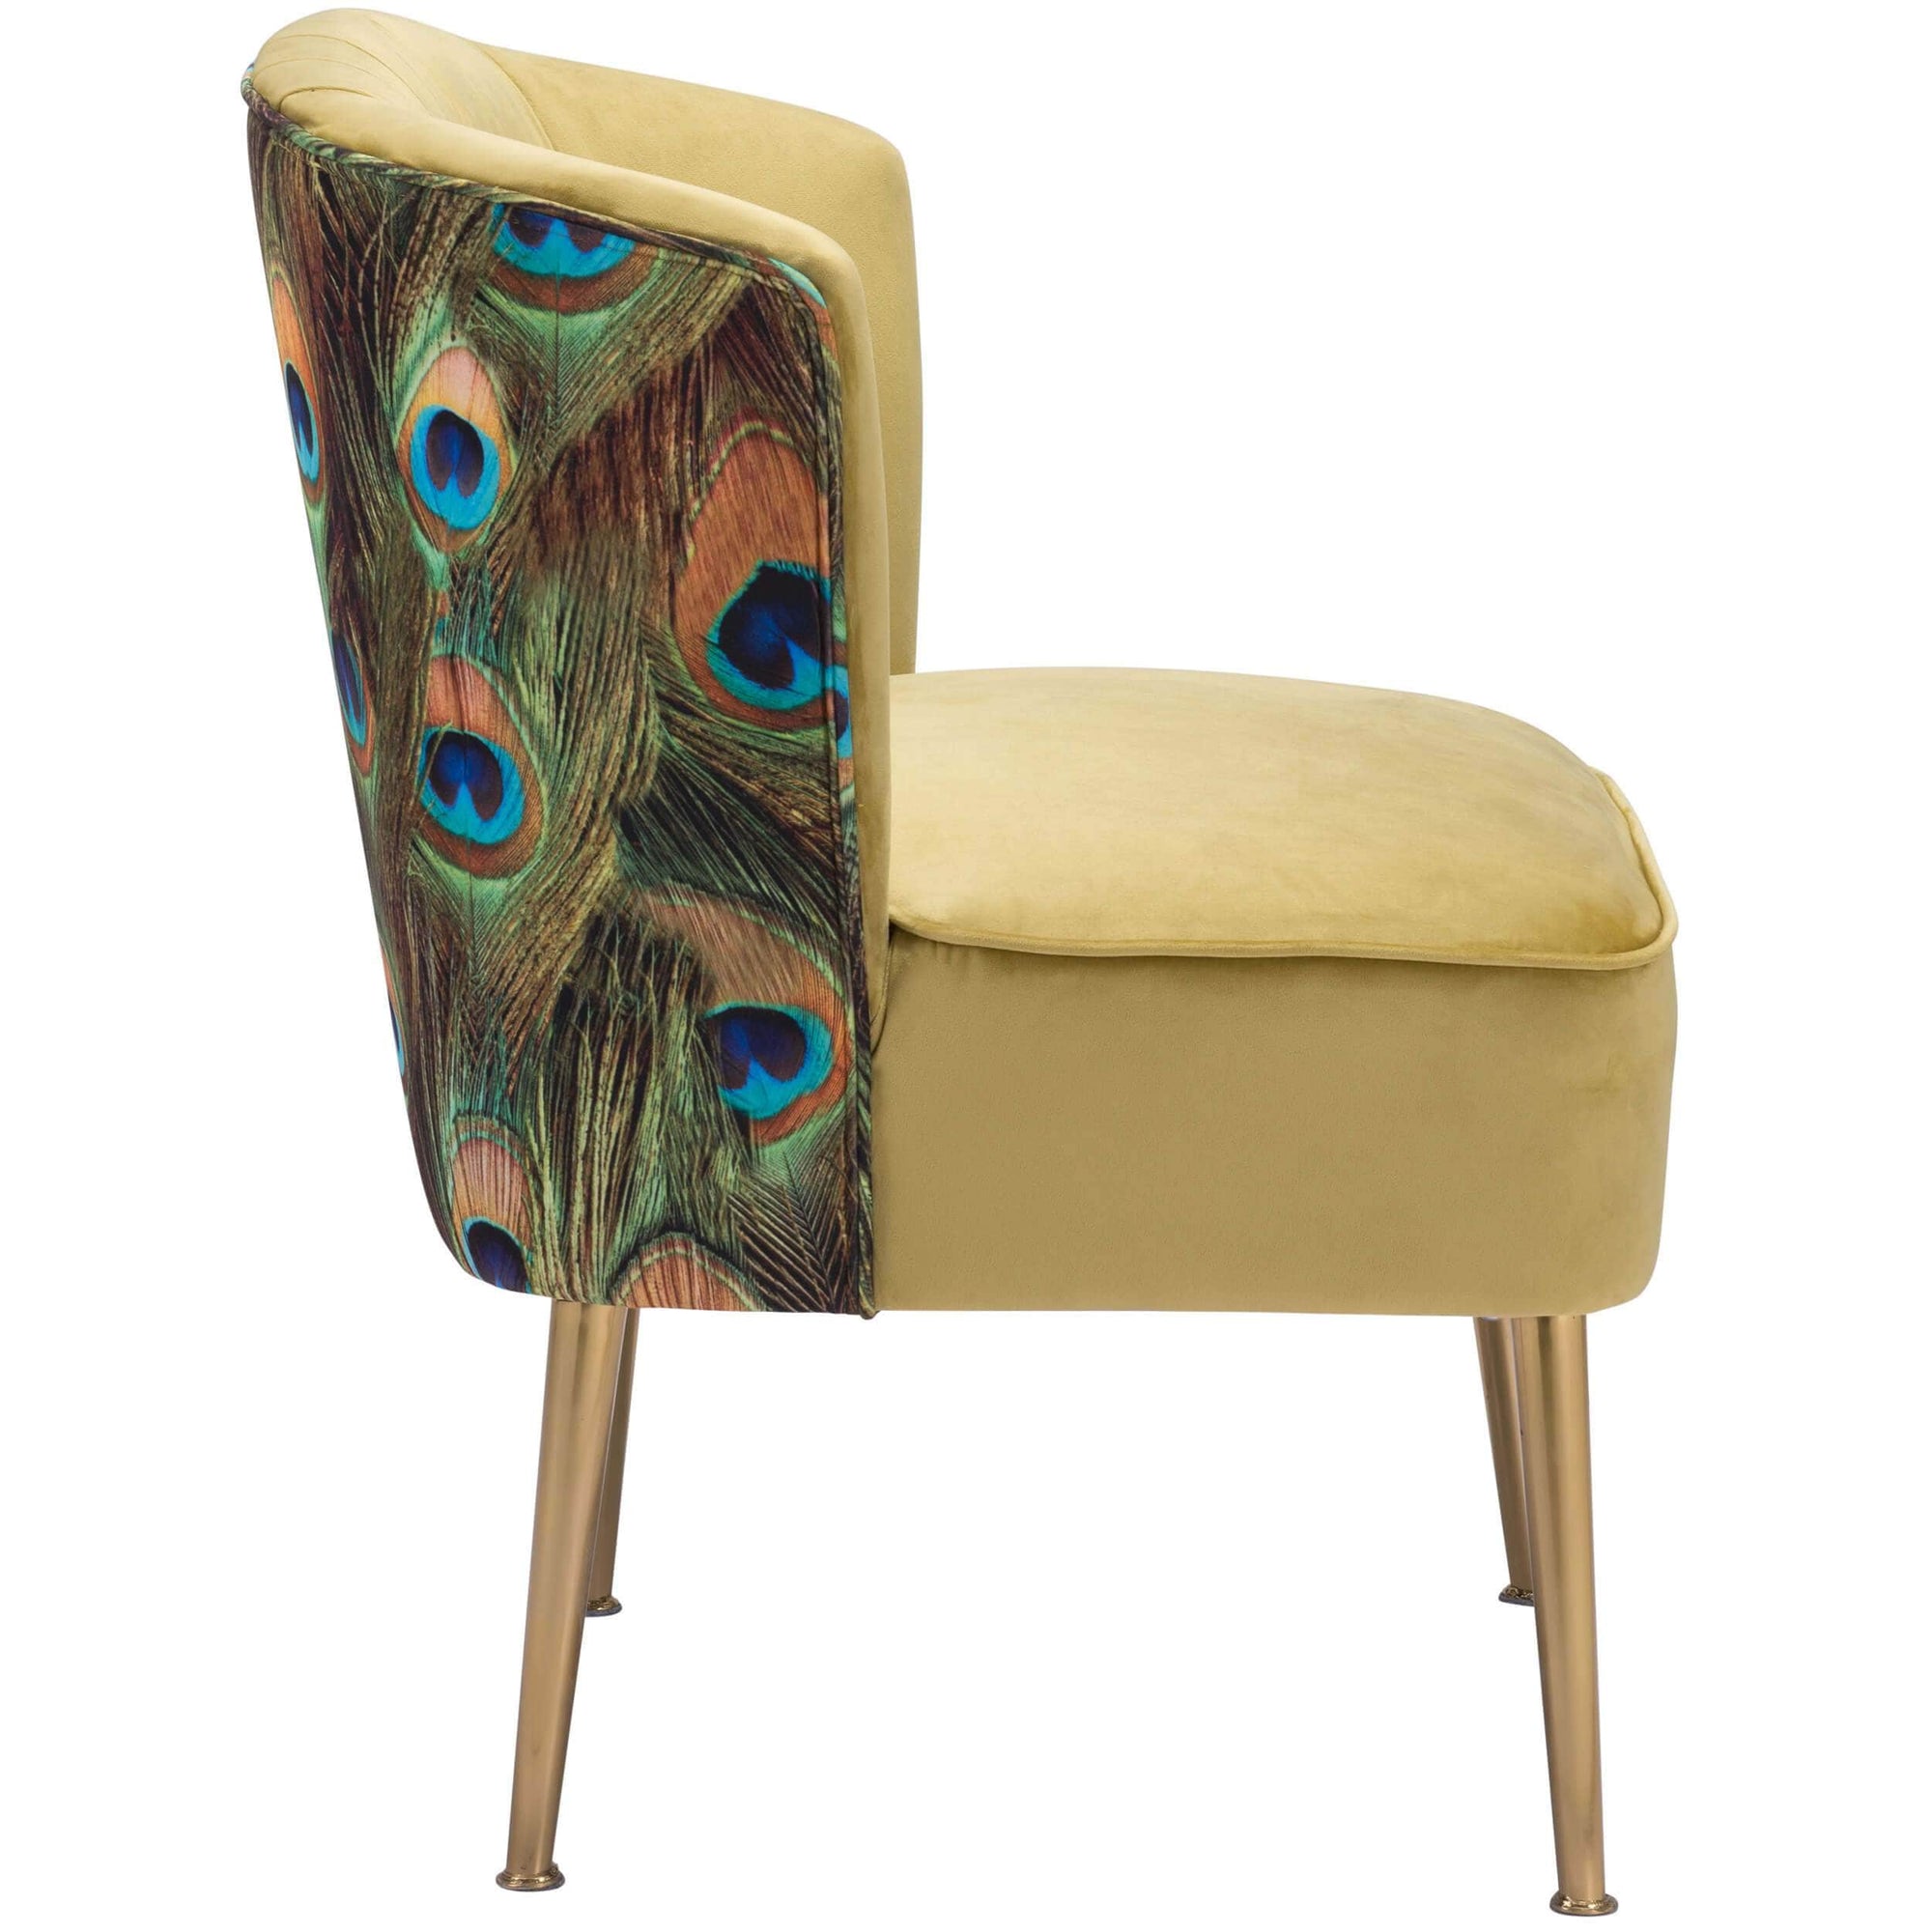 Banyan vrijgesteld gordijn Tabitha Chair Green, Gold/Peacock – High Fashion Home